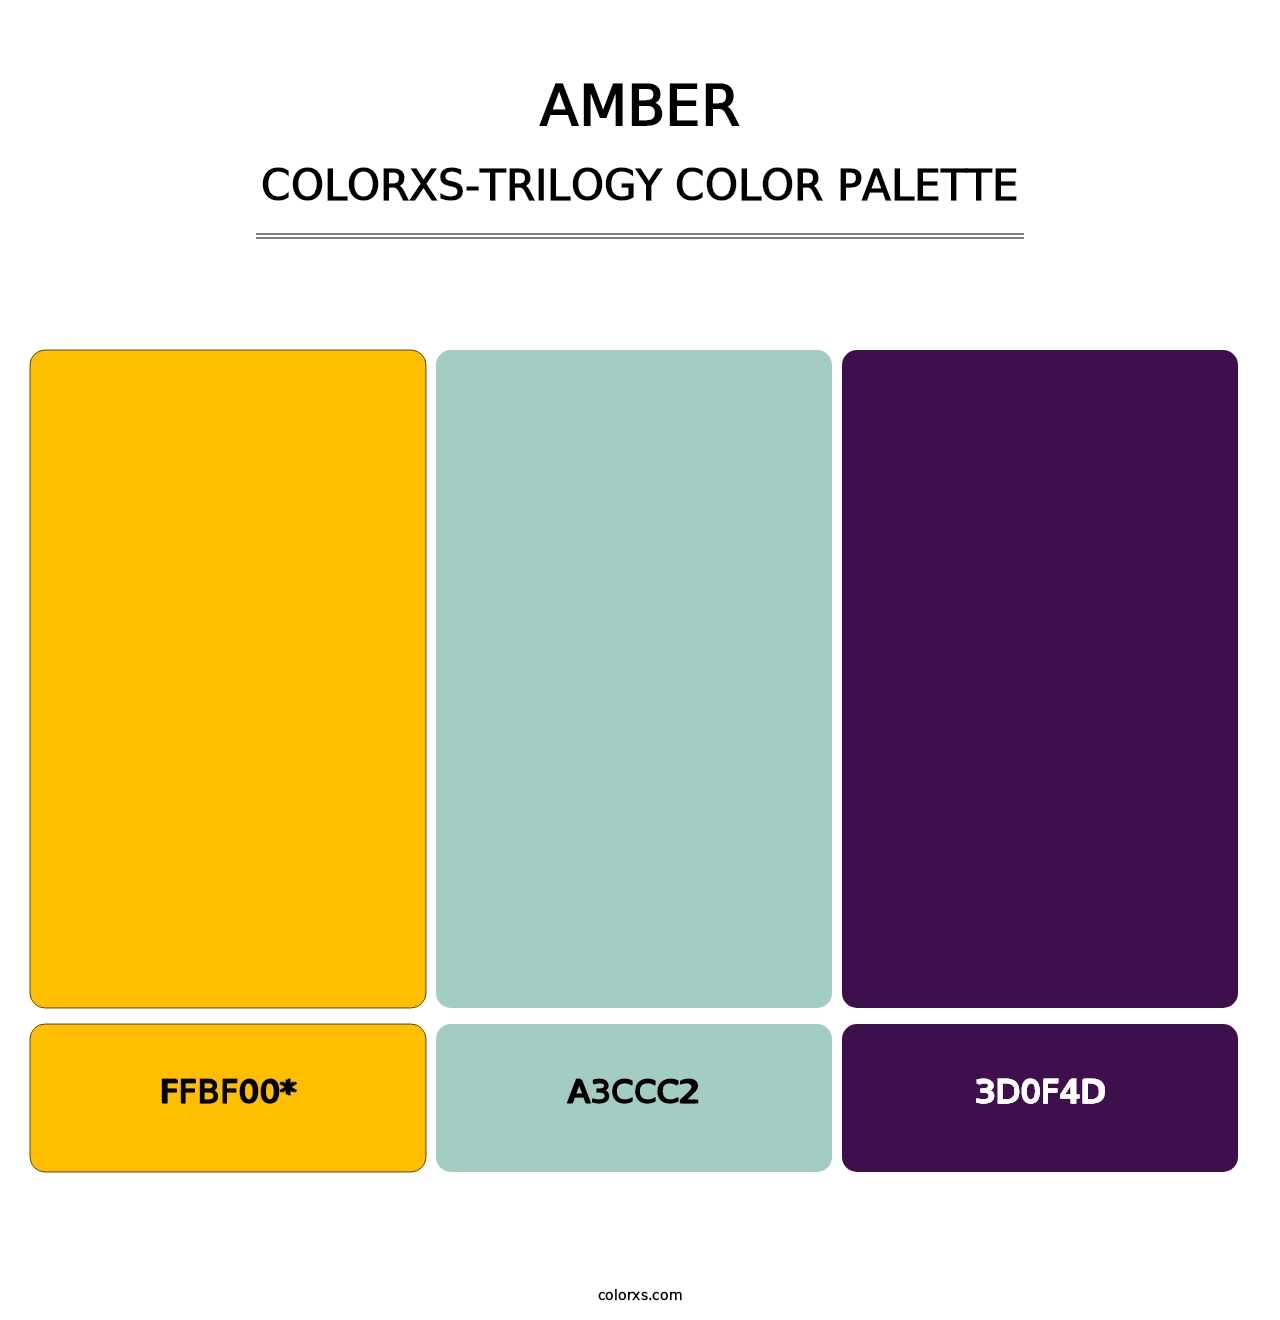 Amber - Colorxs Trilogy Palette